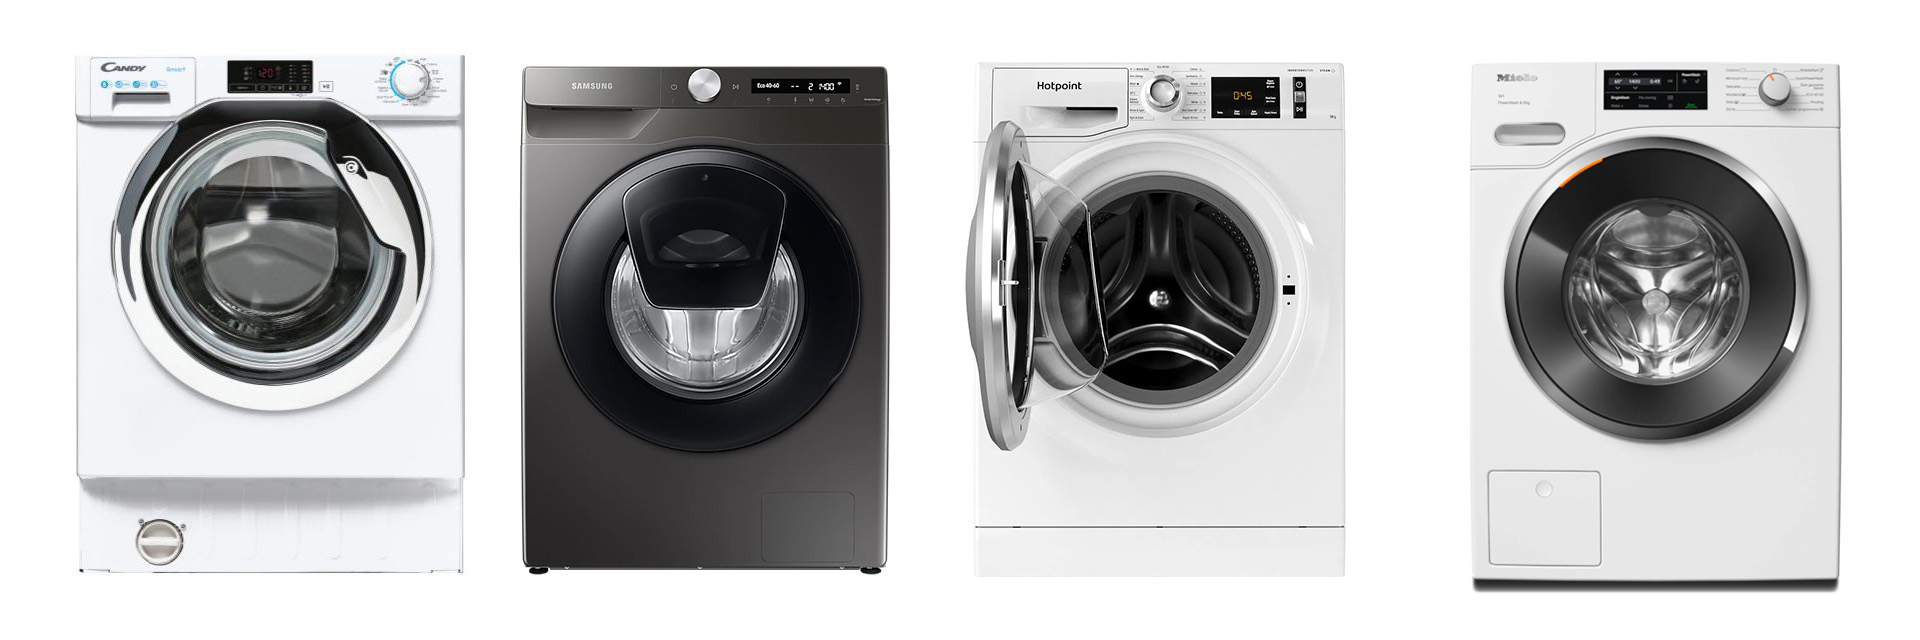 Washing Machine Rentals Bradford | Appliance Repairs Bradford